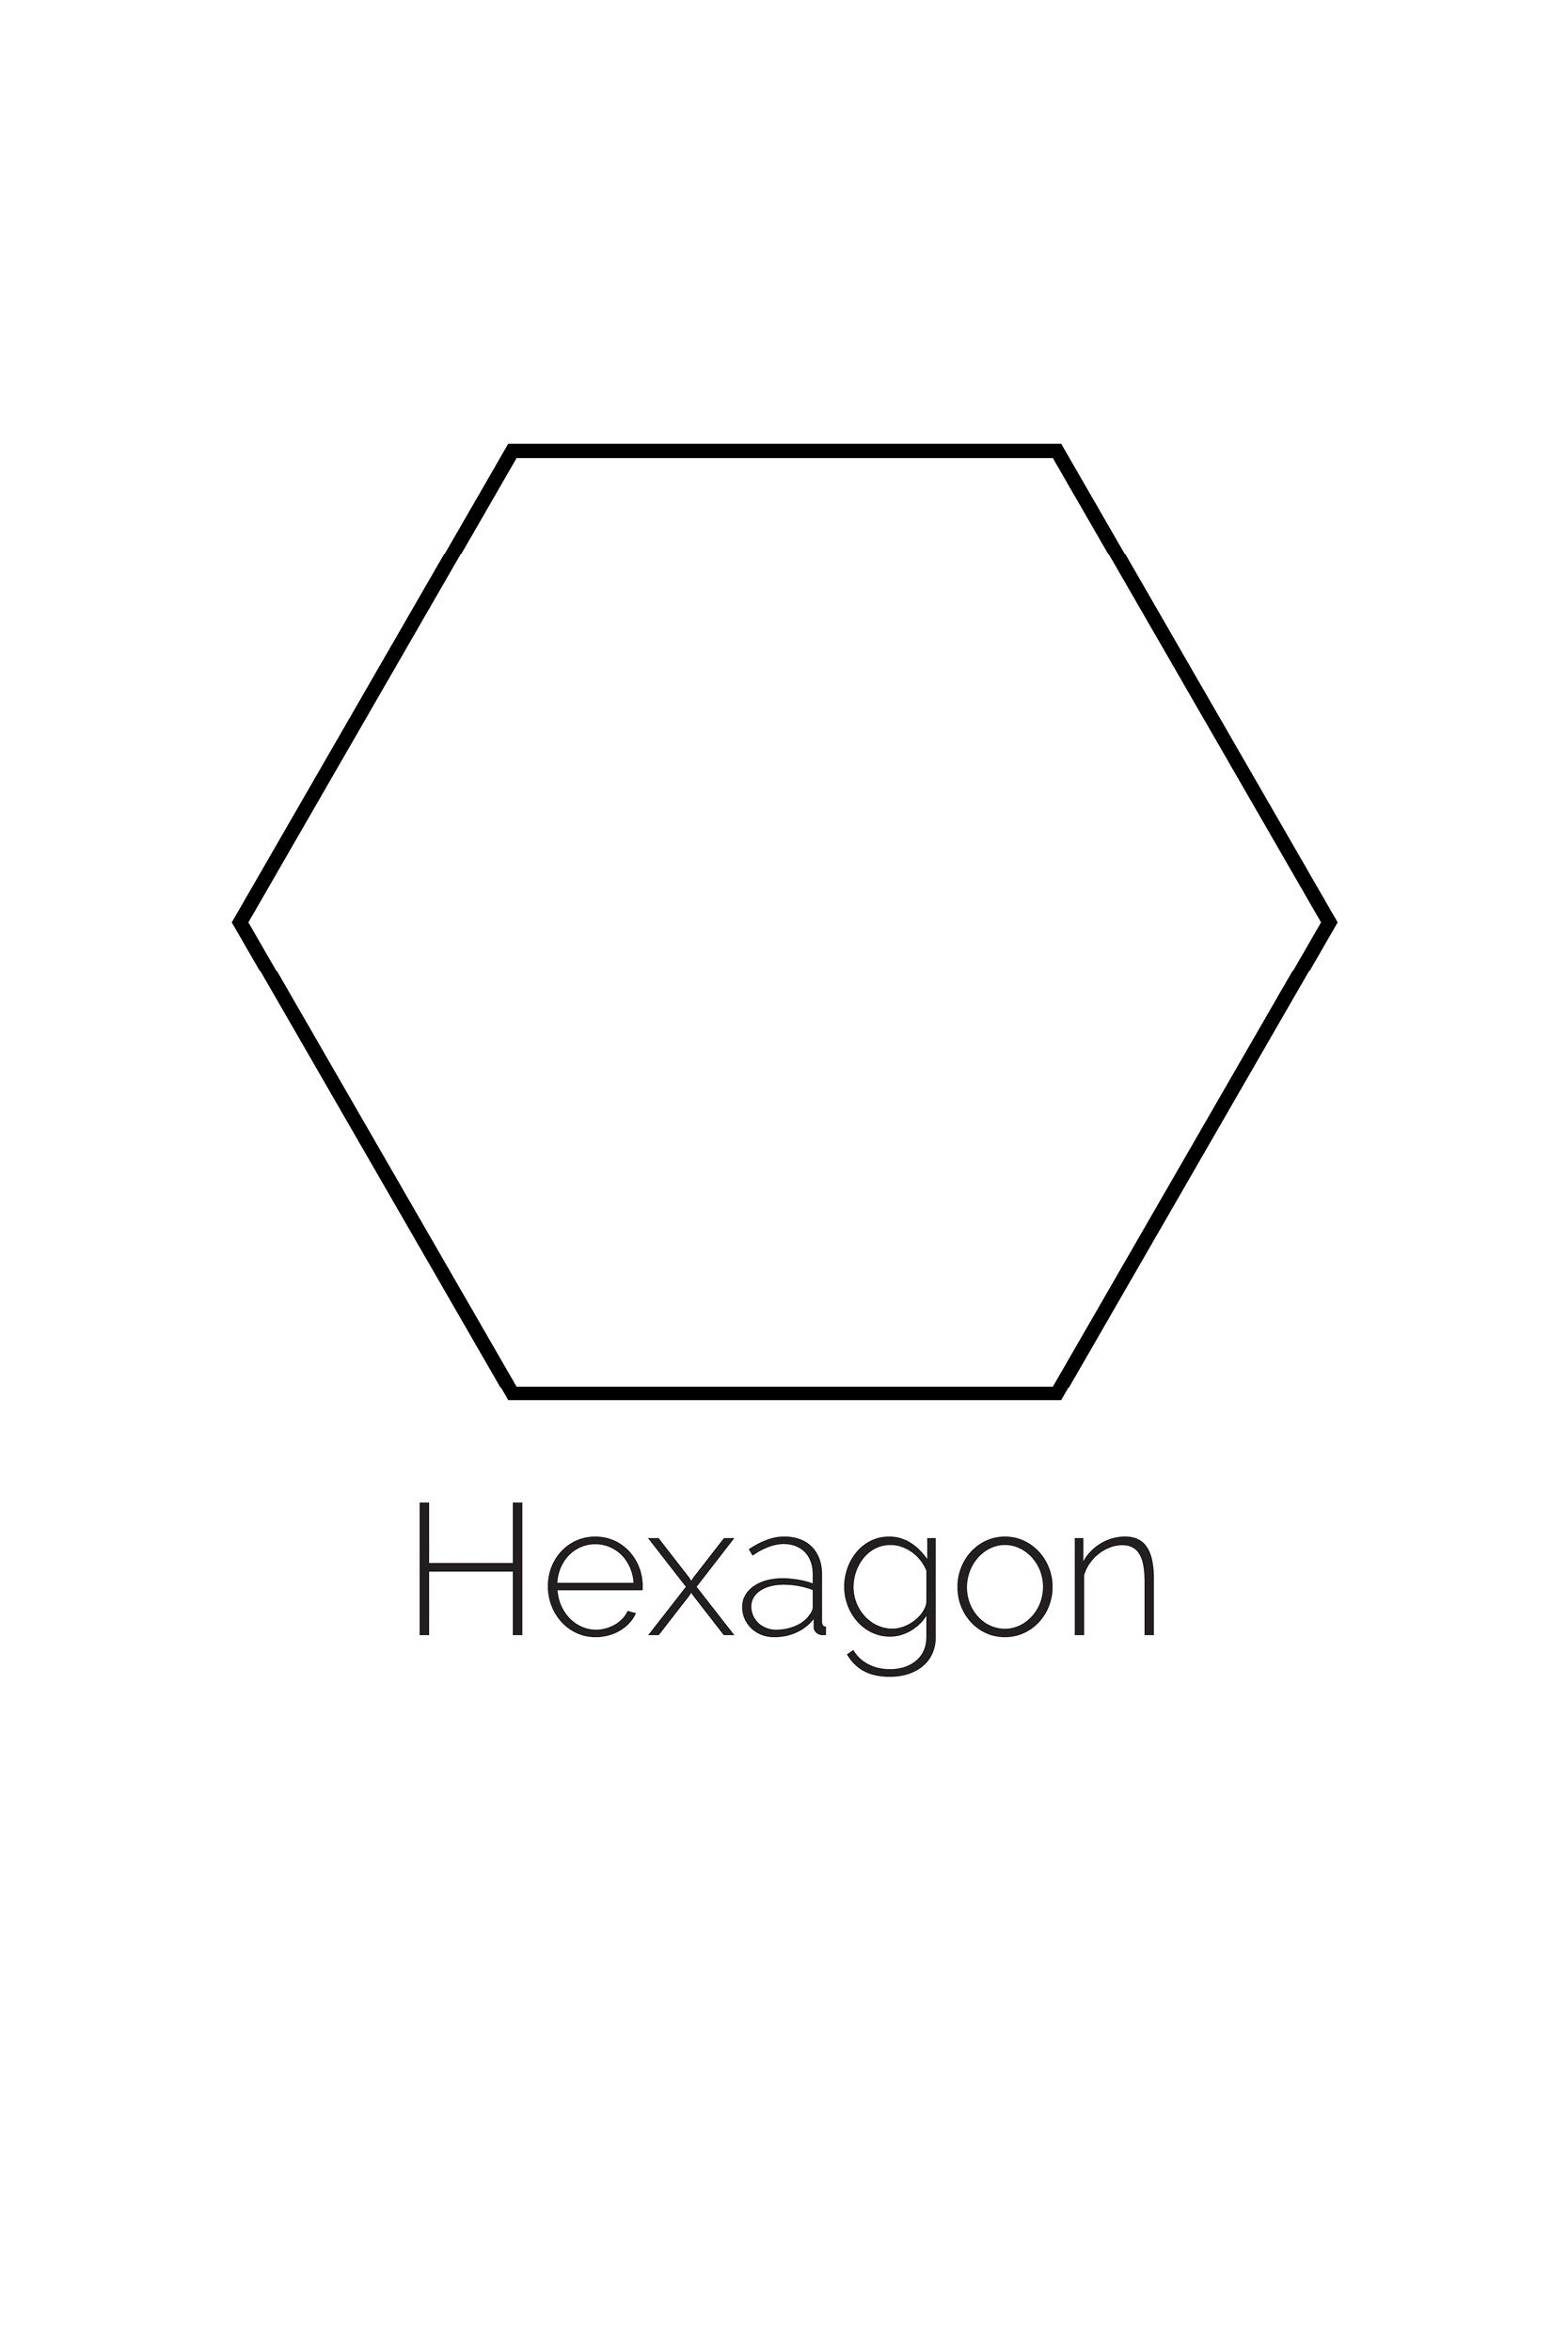 Free Printable Hexagon Shape Freebie Finding Mom